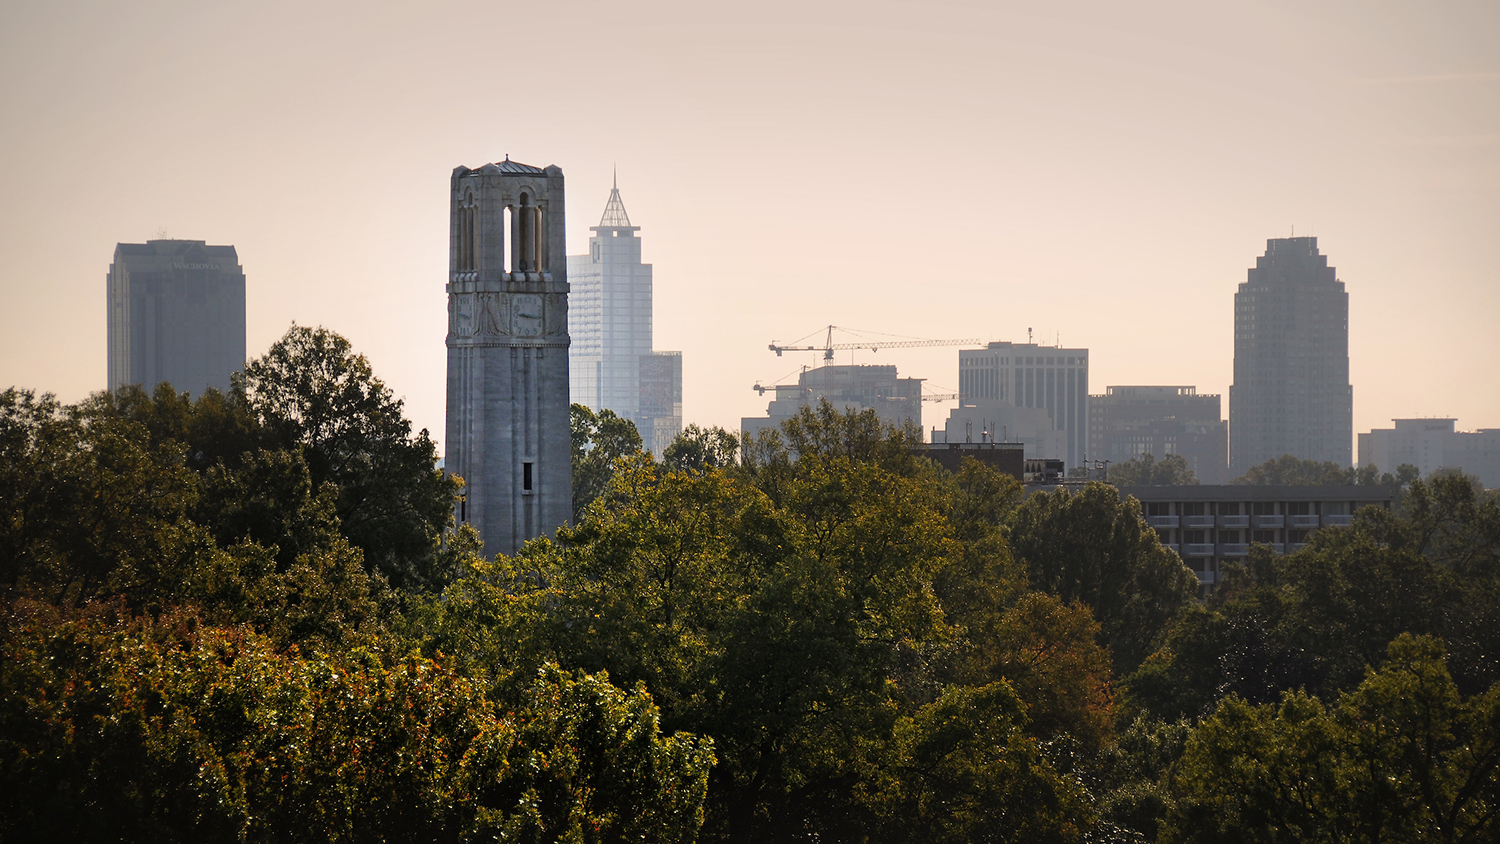 Downtown Raleigh skyline rises up behind the Memorial Belltower.